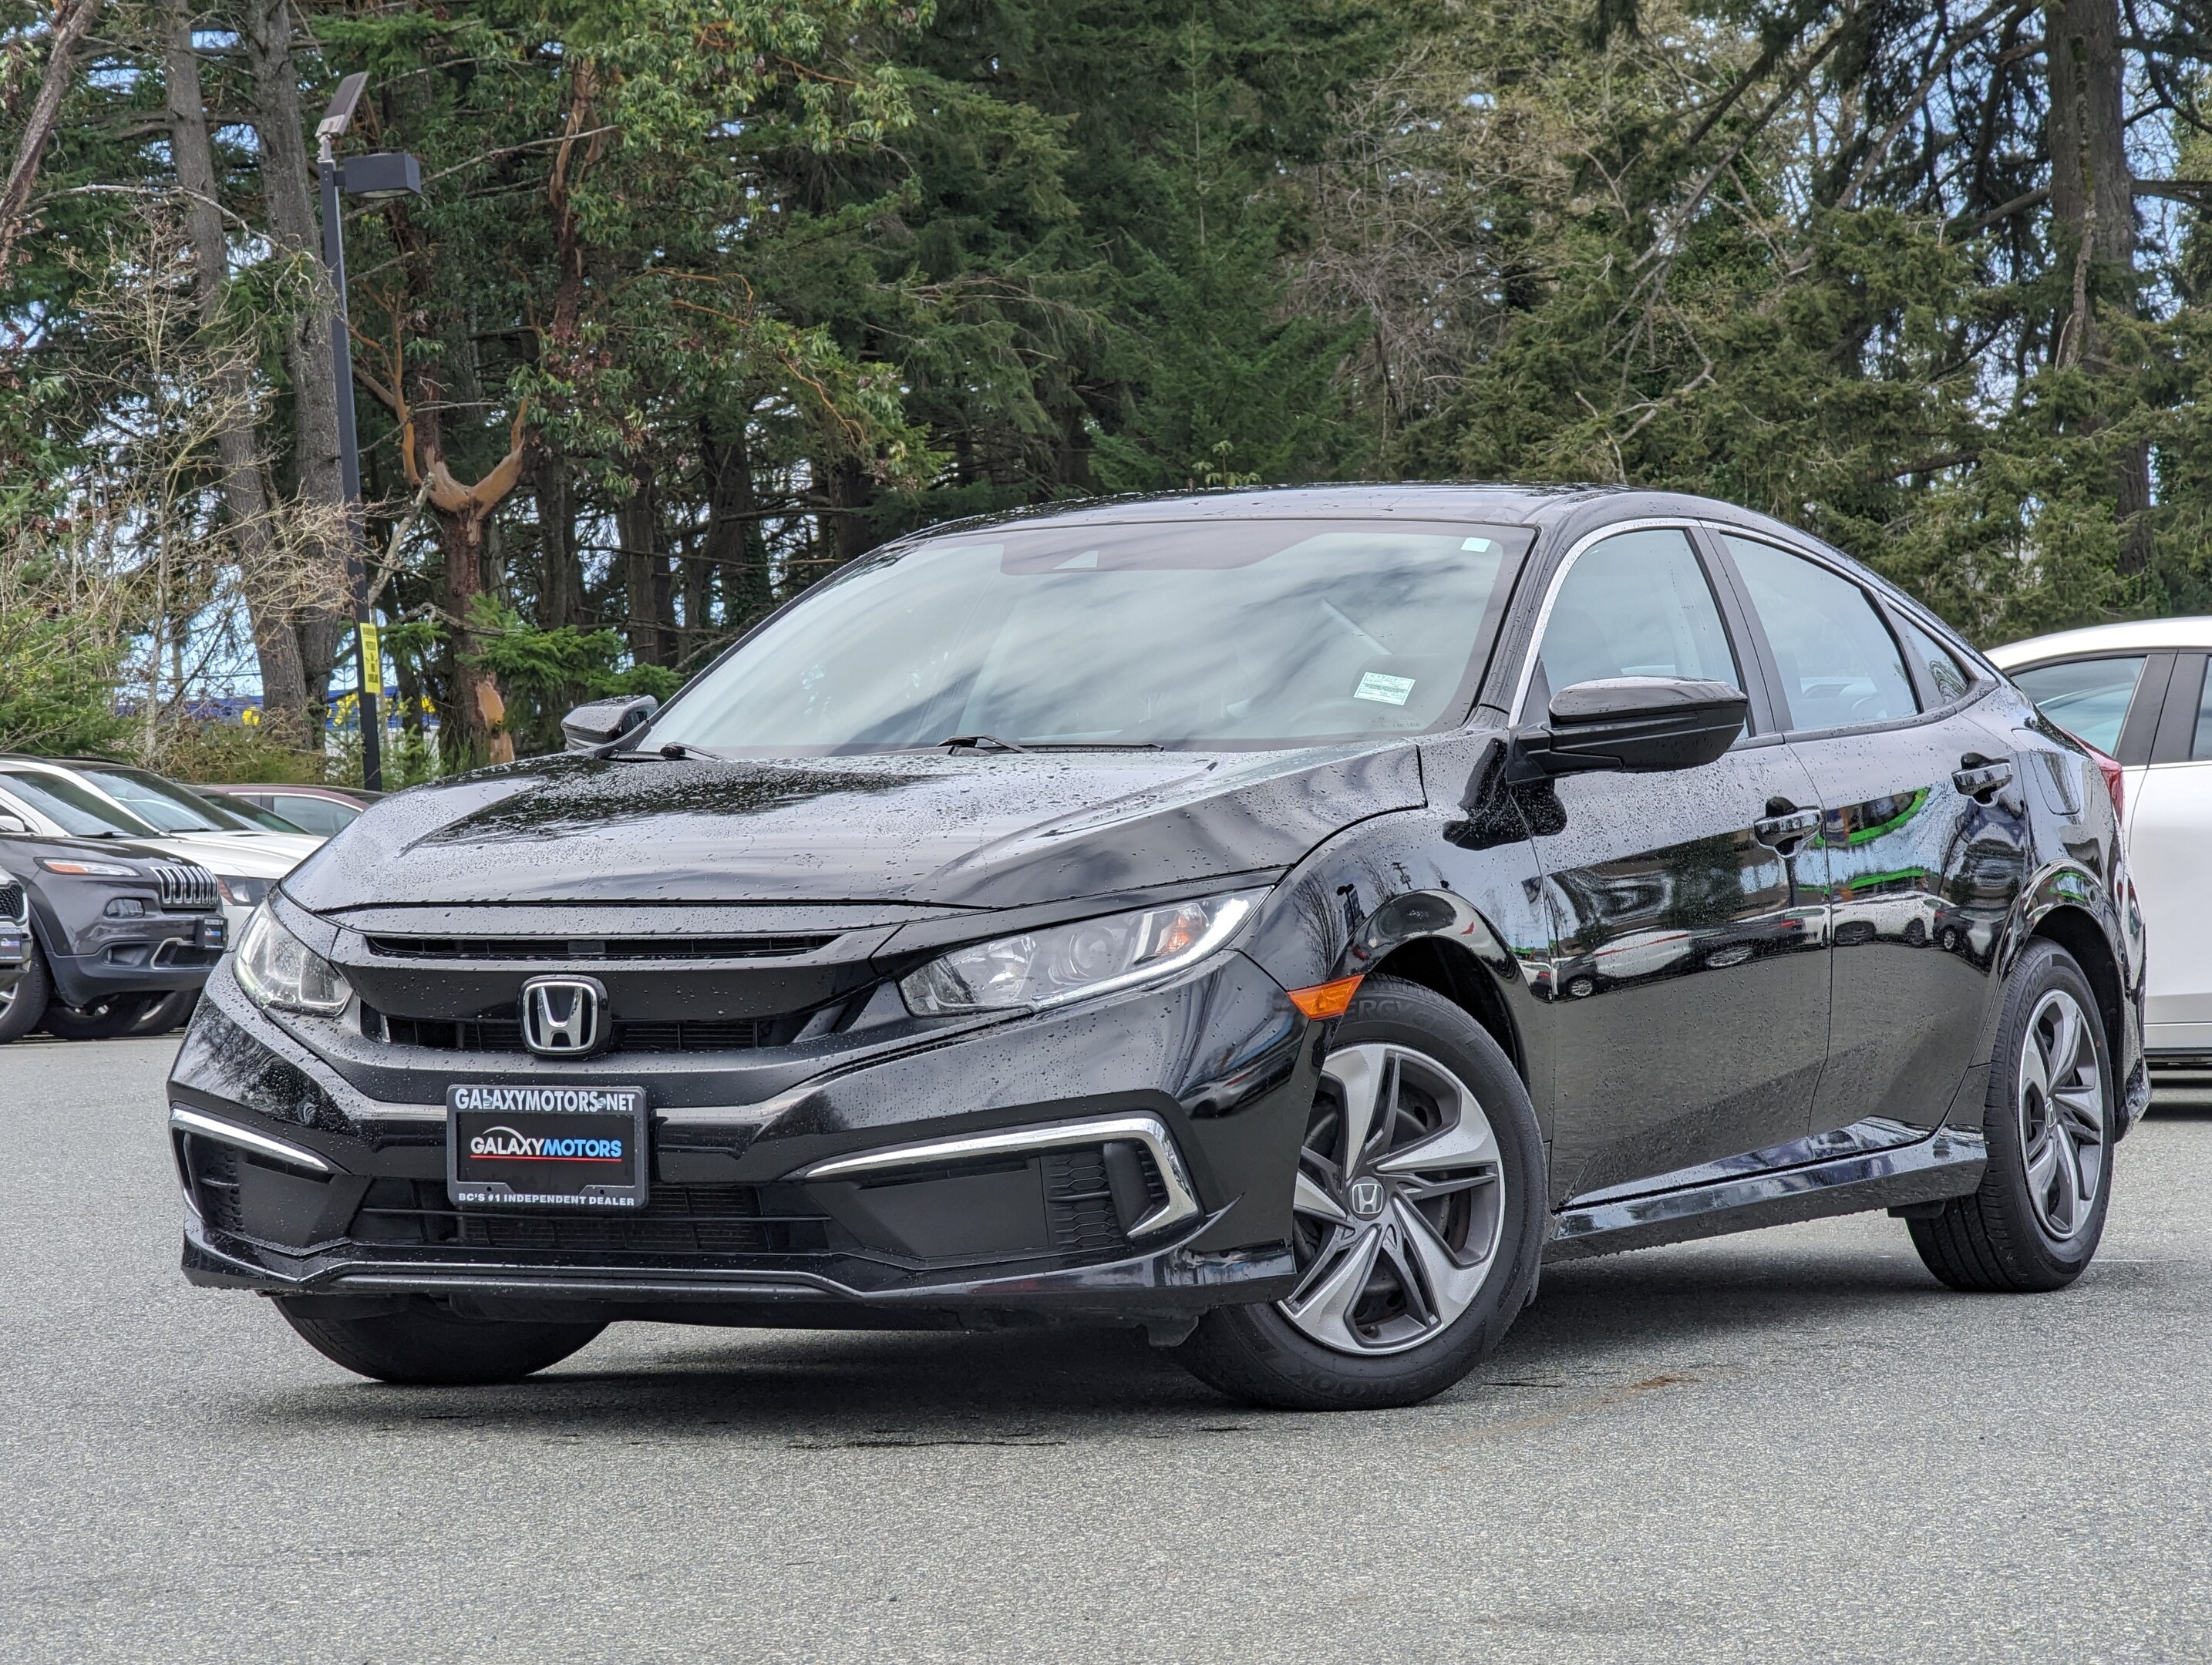 2021 Honda Civic LX - Heated Seats, Android Auto/Apple CarPlay